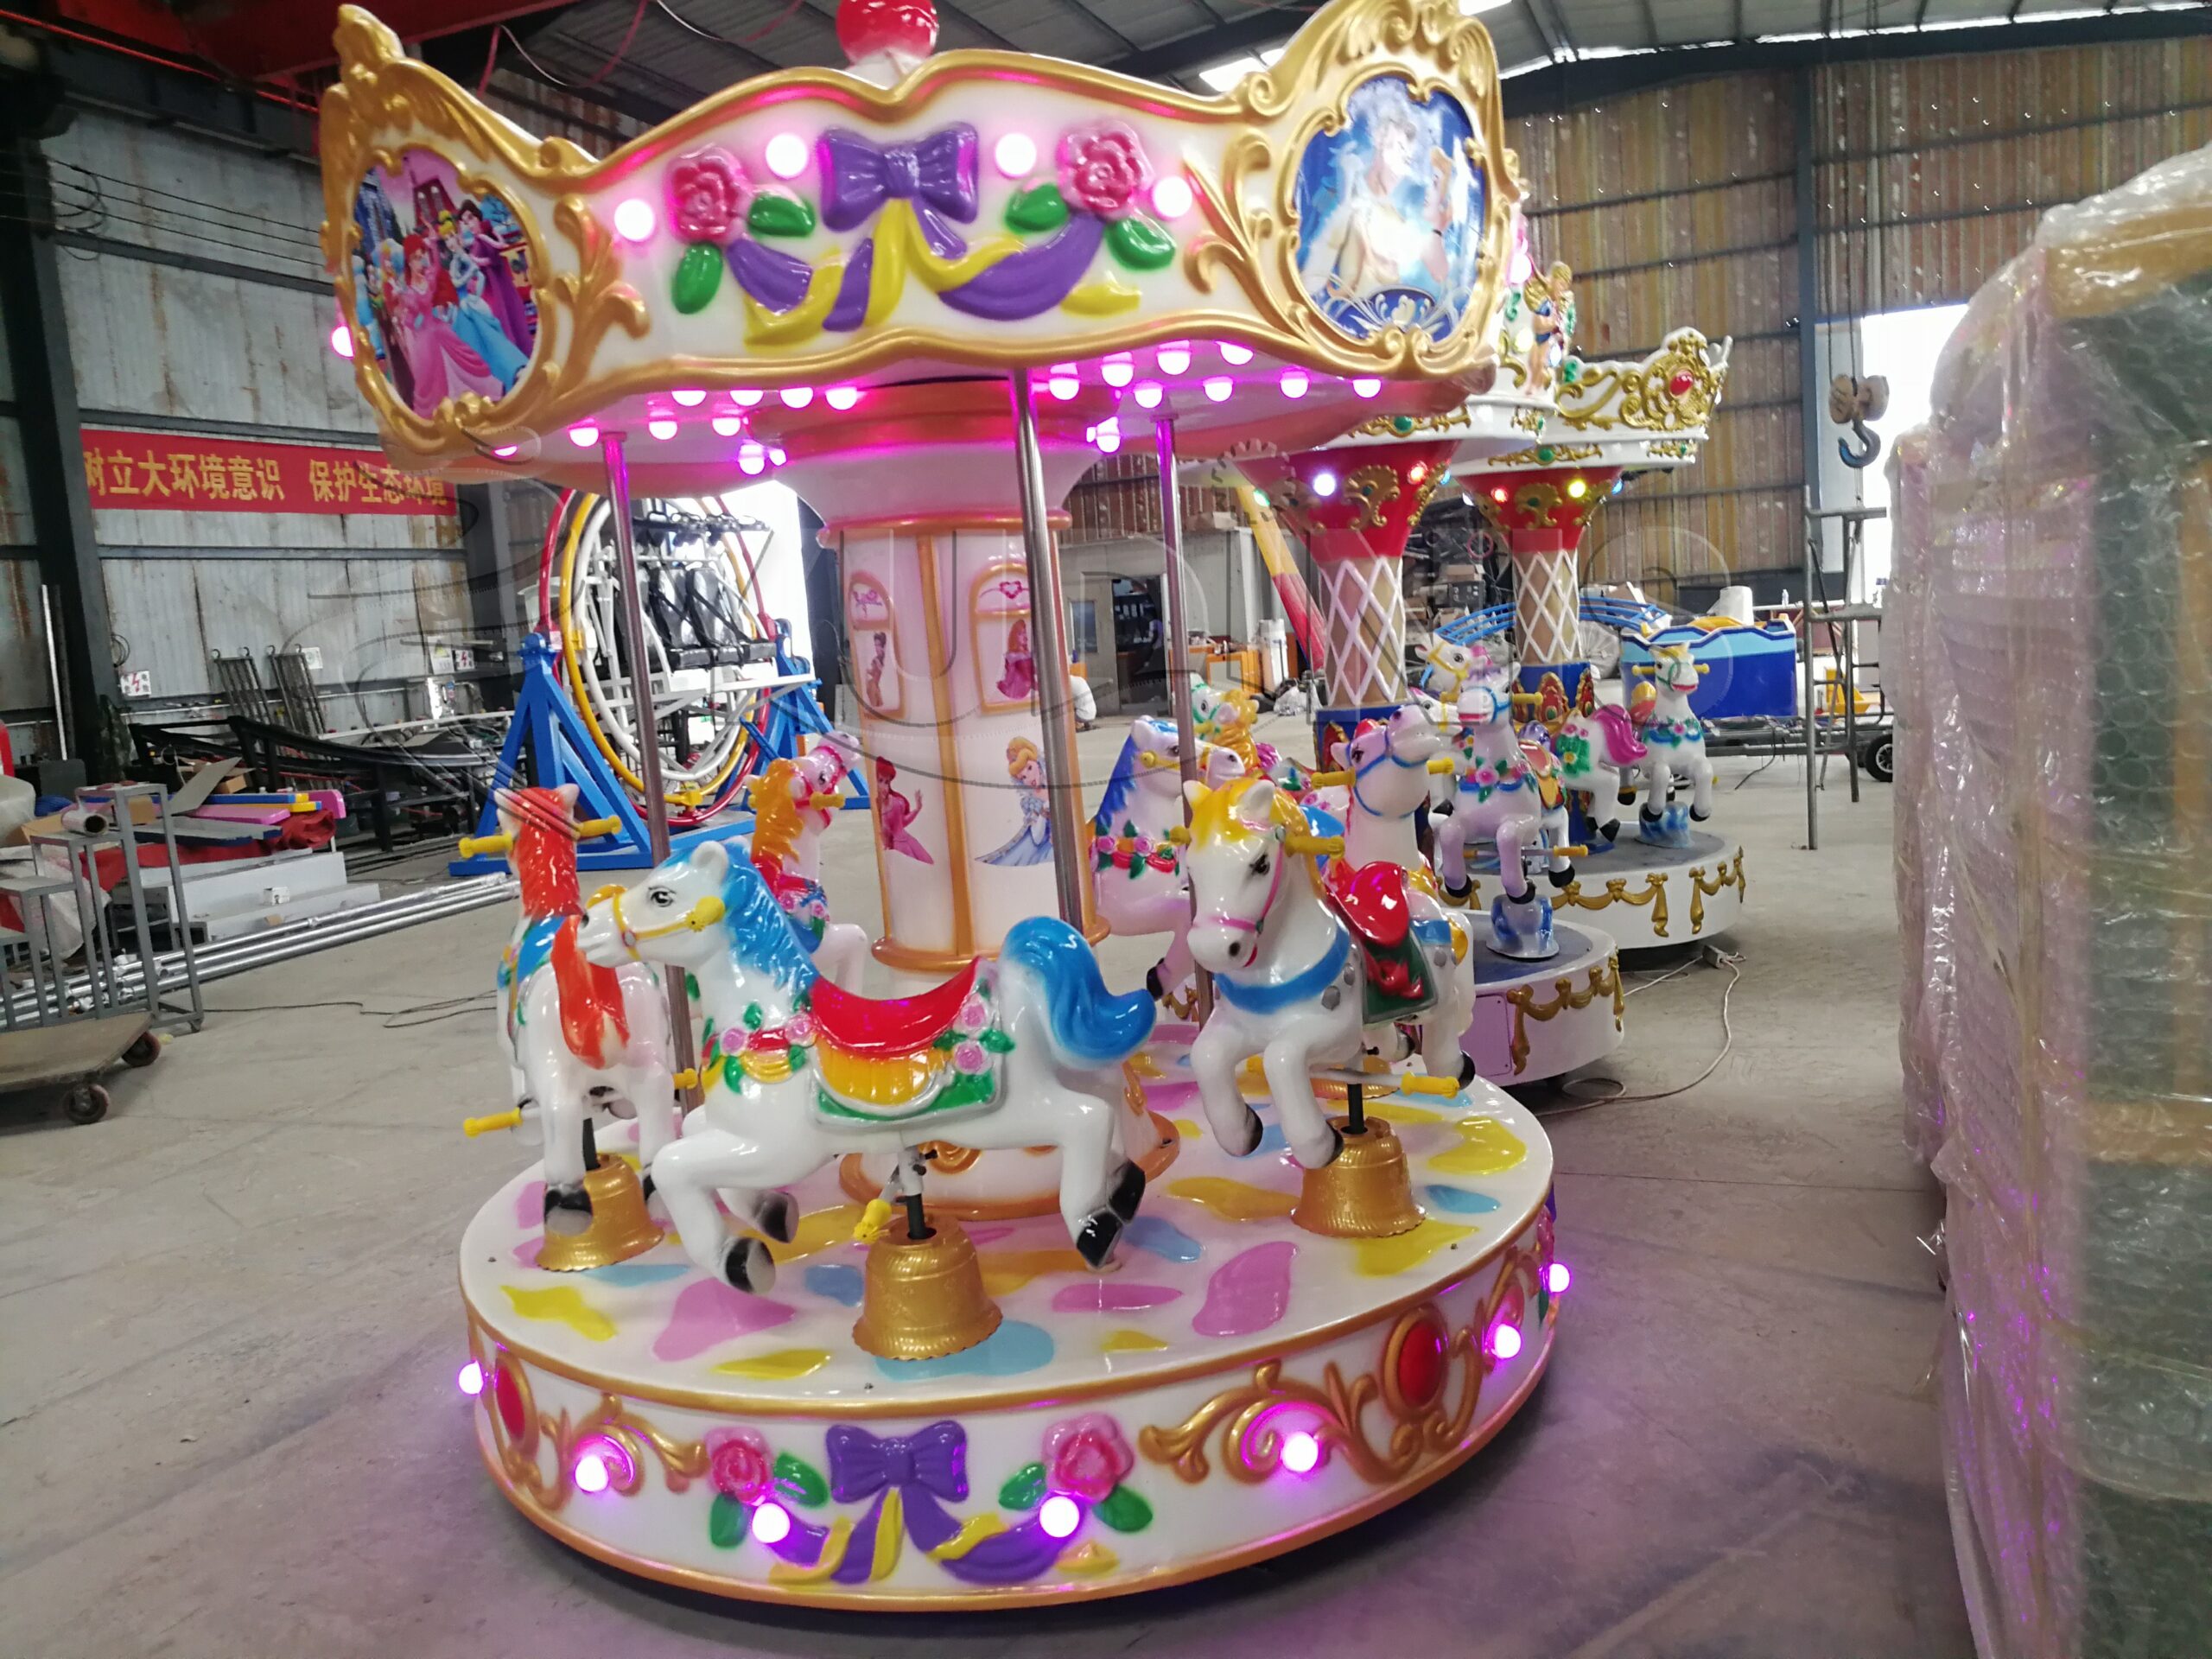 Carousel ride for kids